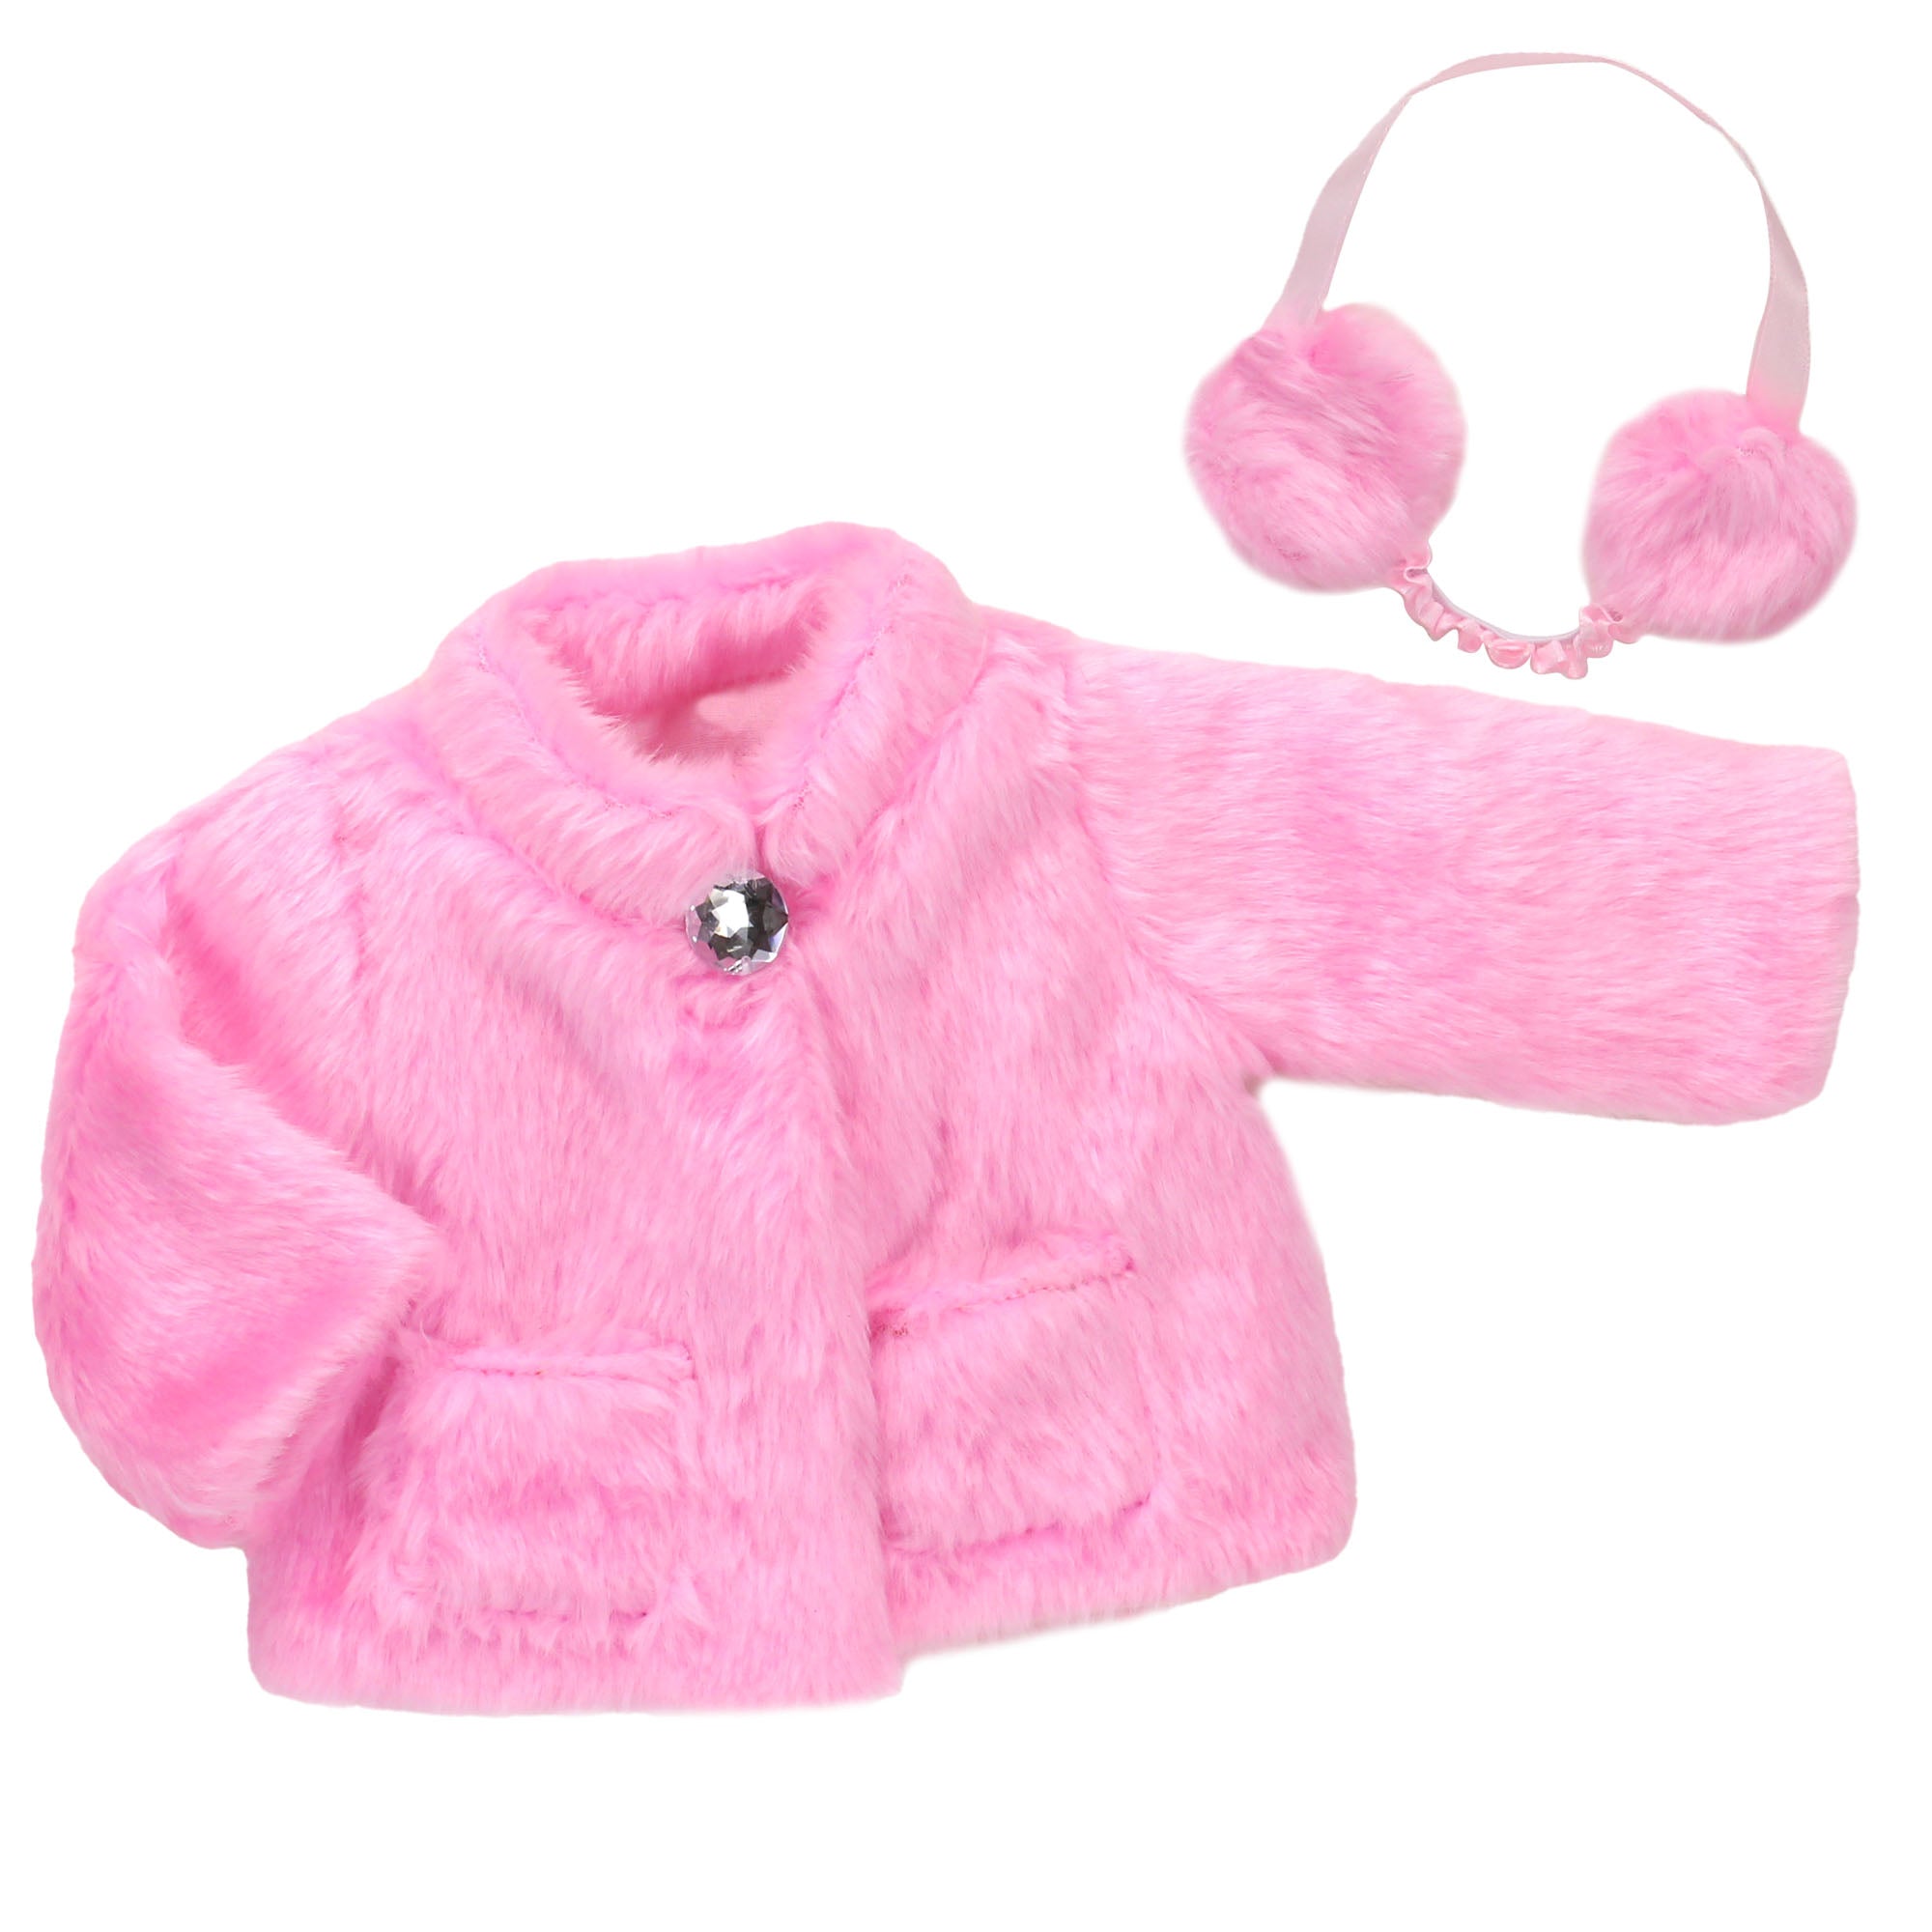 Sophia’s Pink faux fur Coat and Earmuff Headband Set for 18" Dolls